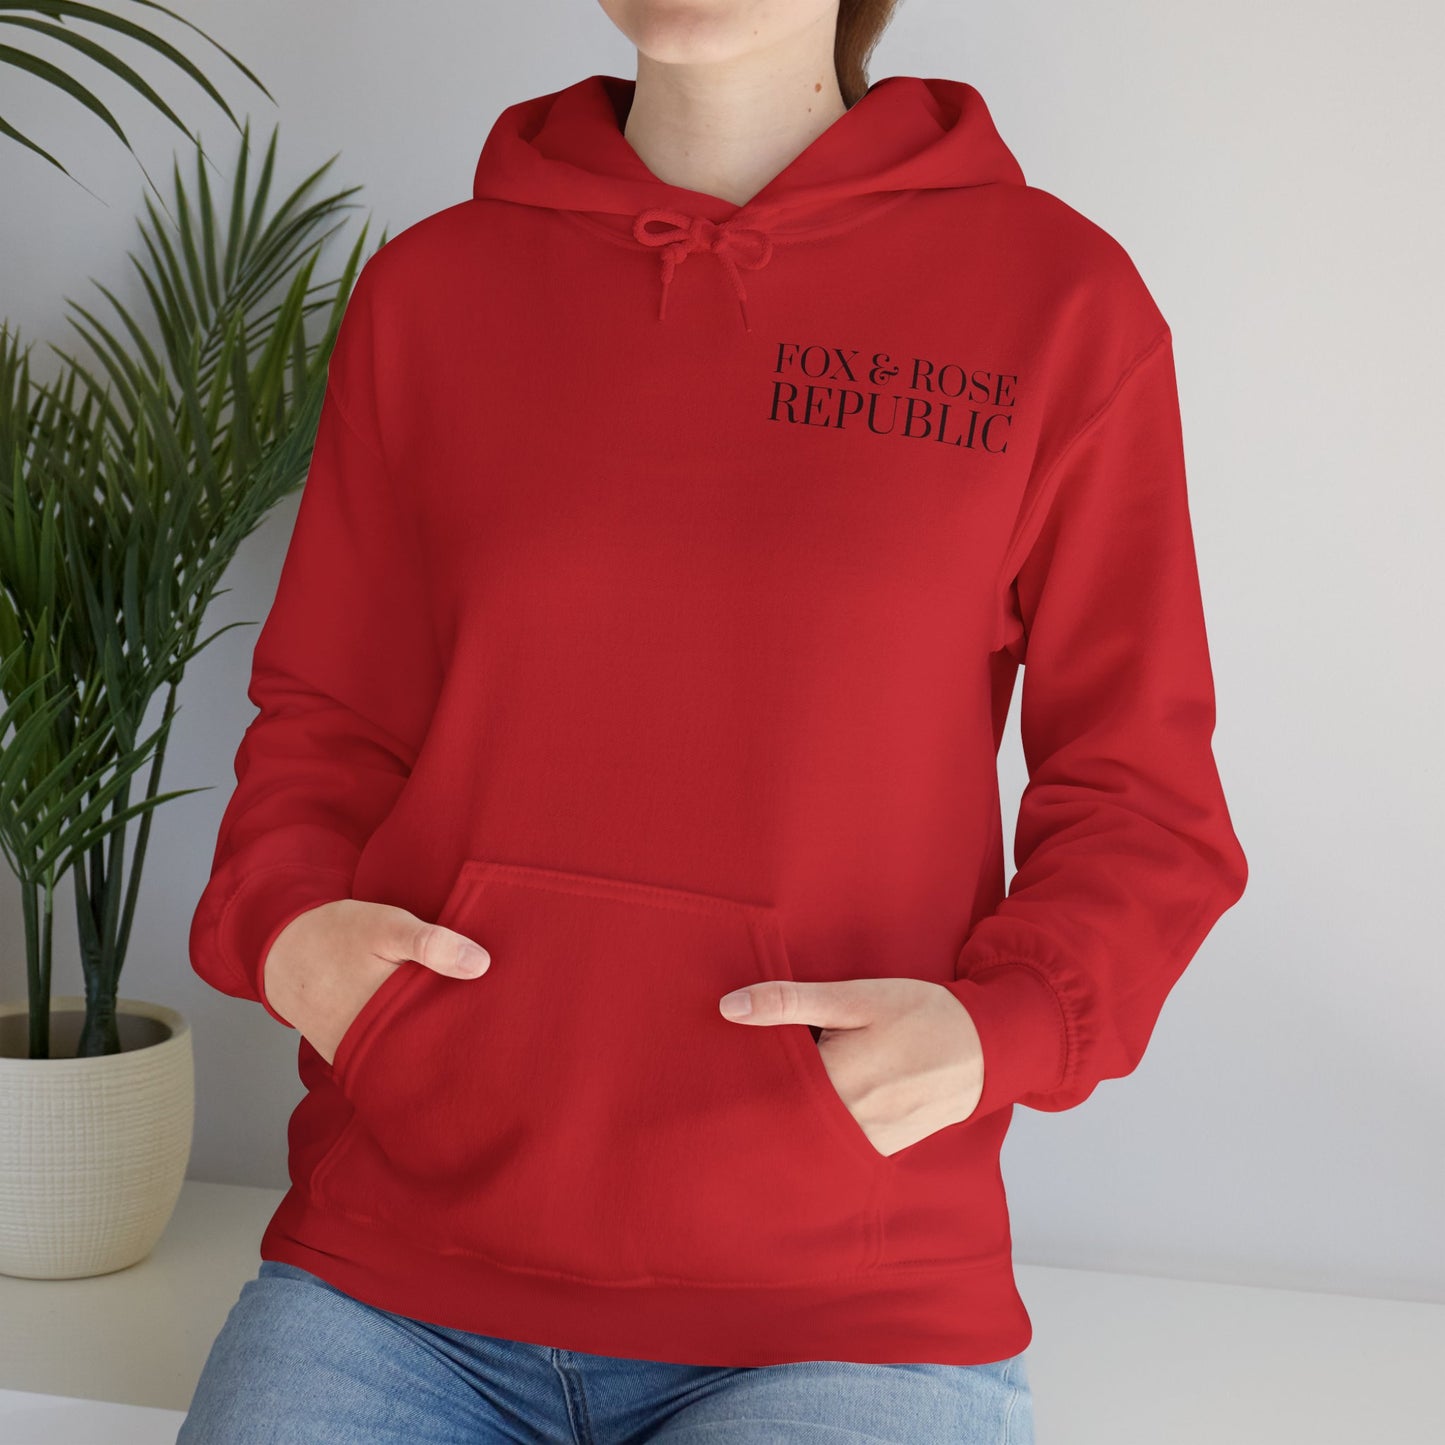 Fox & Rose Republic Unisex Heavy Blend™ Hooded Sweatshirt